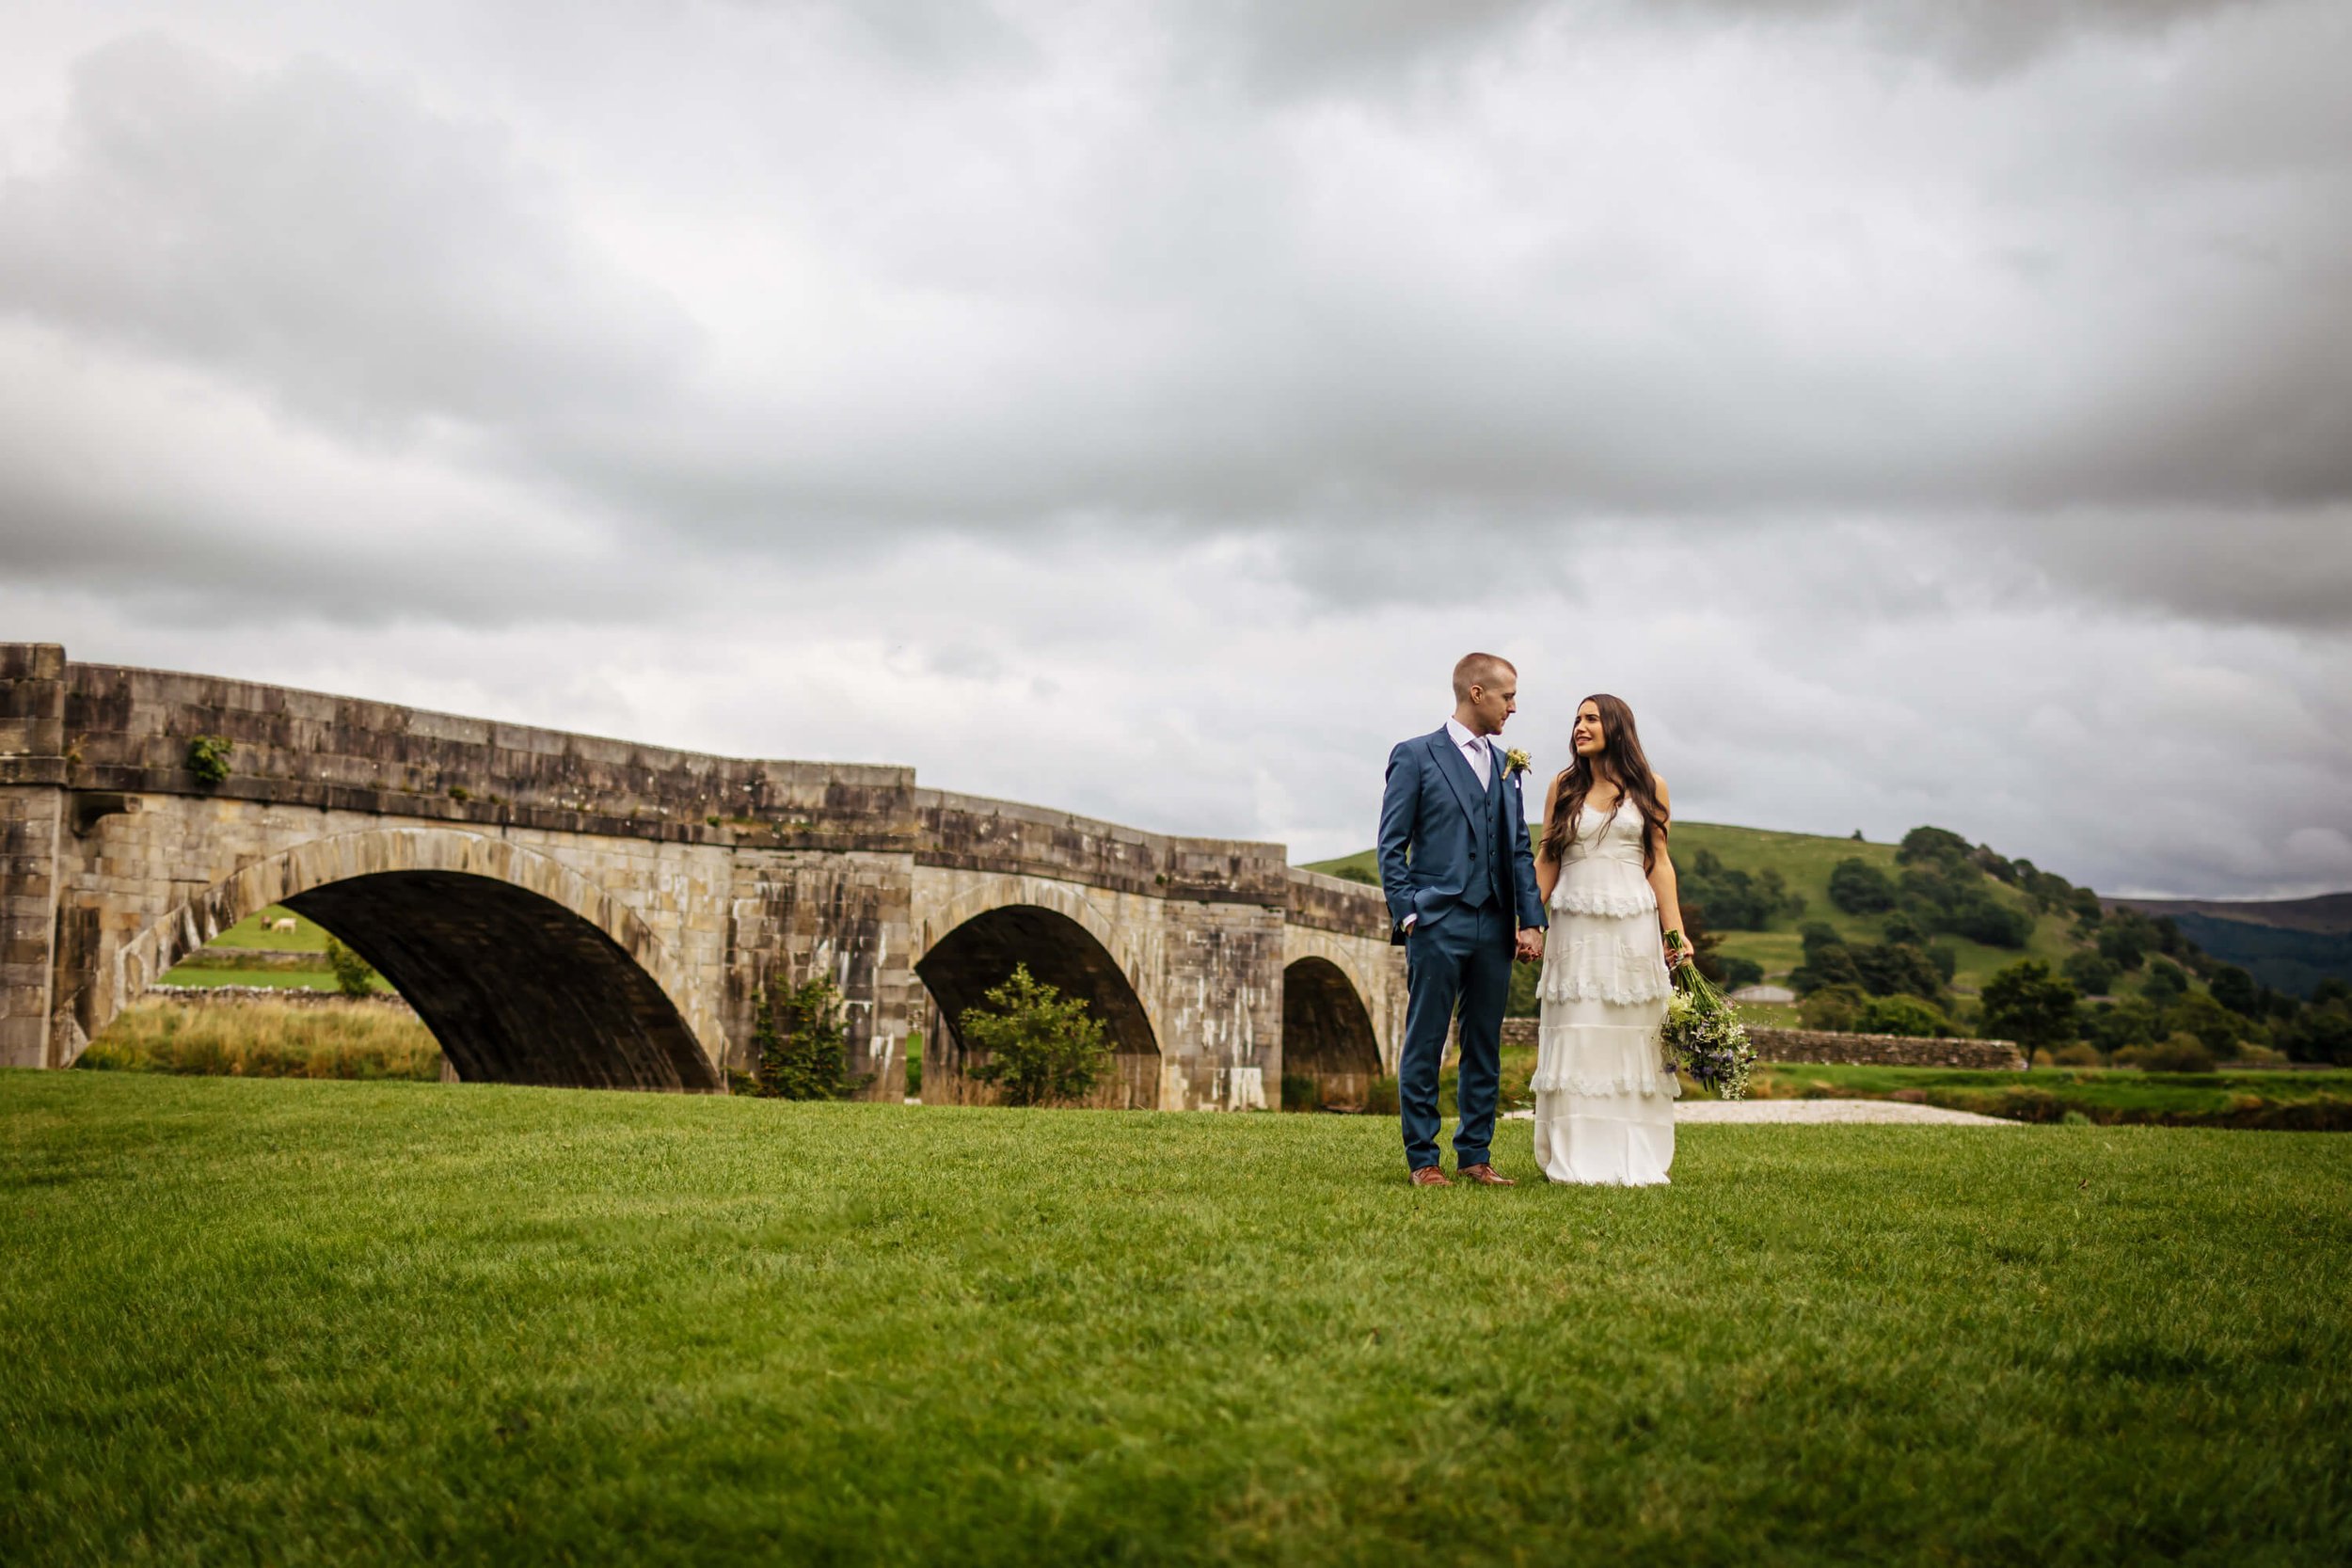 Burnsall bridge in the background of a wedding portrait